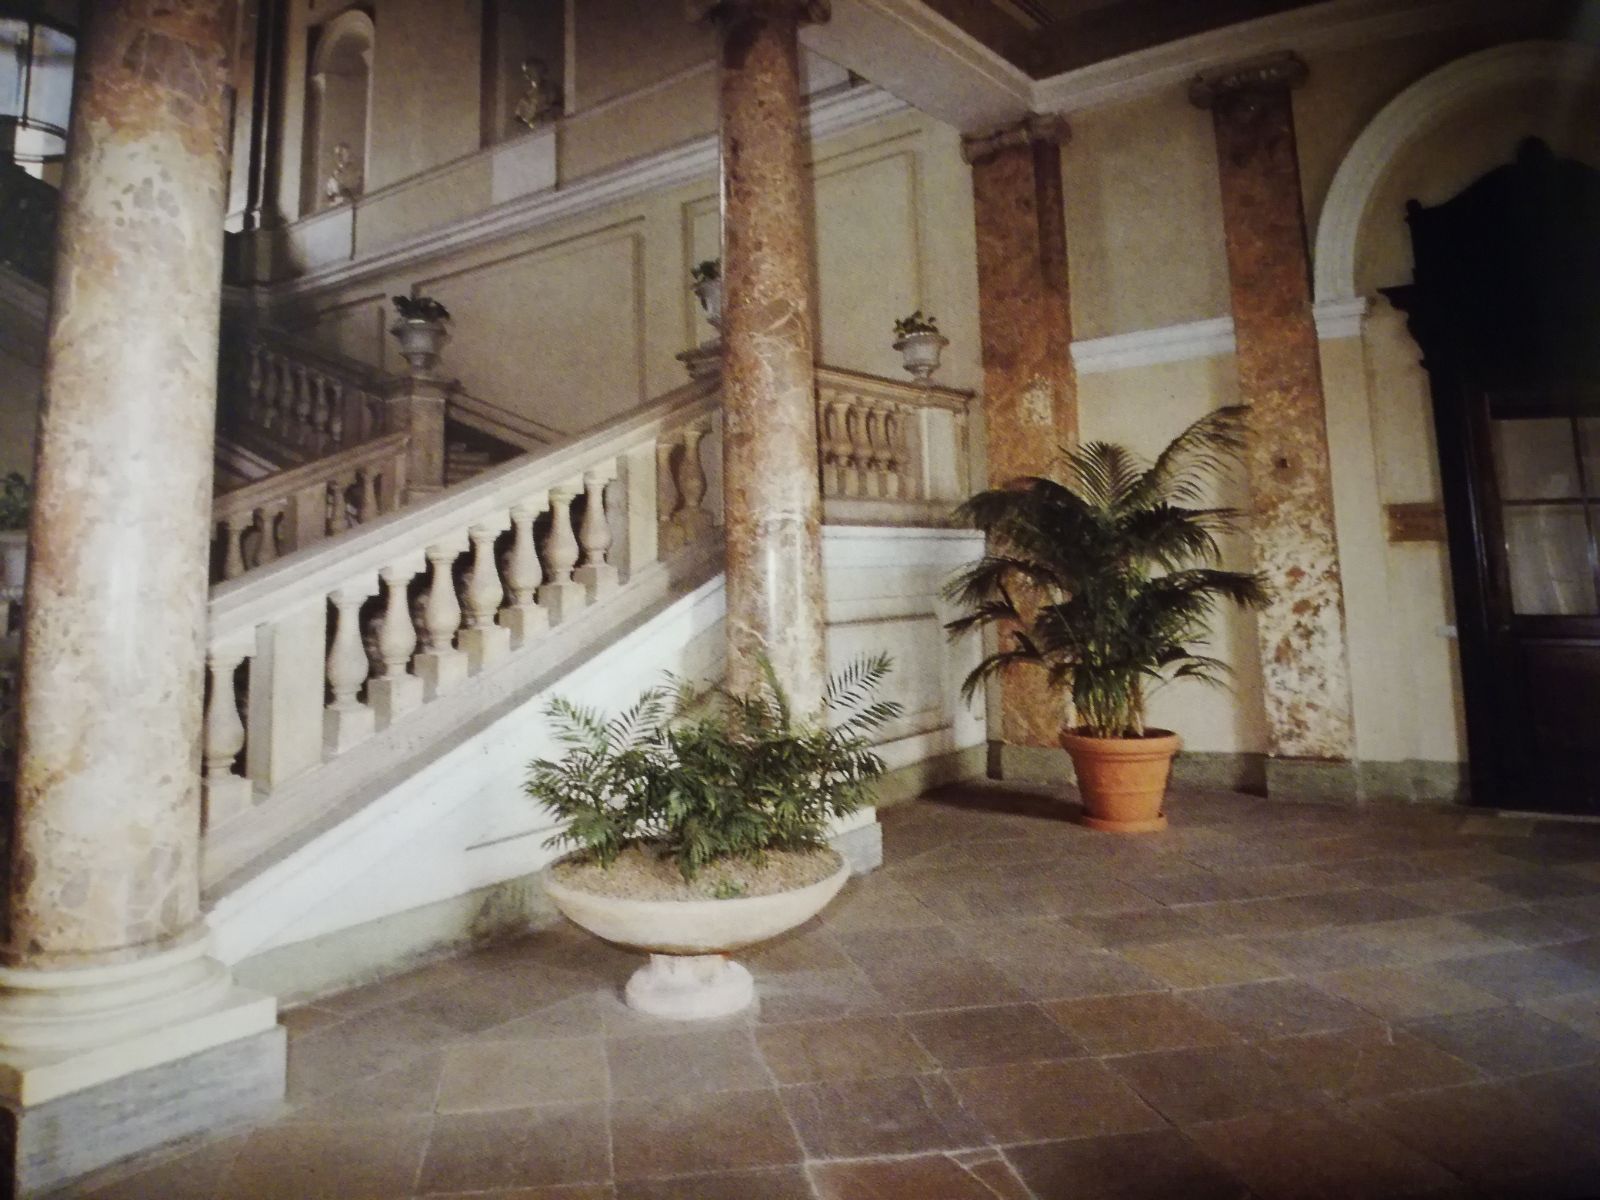 Stairs and columns @ Castello di Moncalieri - residenze Sabaude